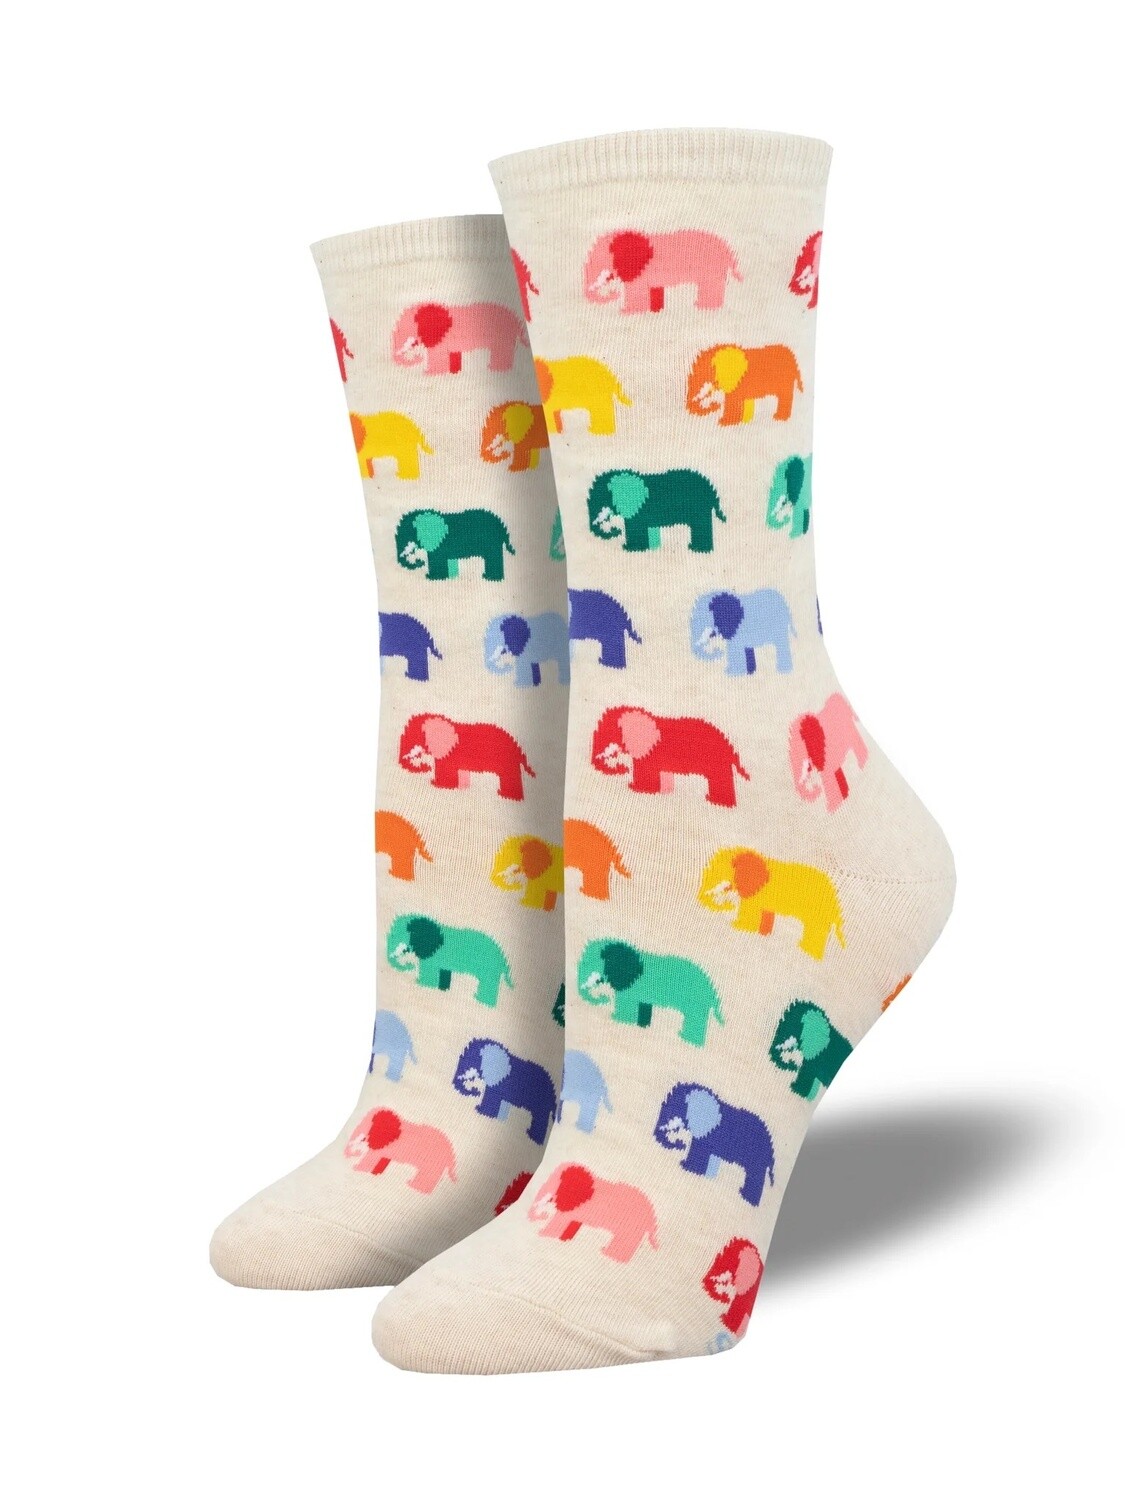 Elephant In The Room Ivory Heather Women's Socks